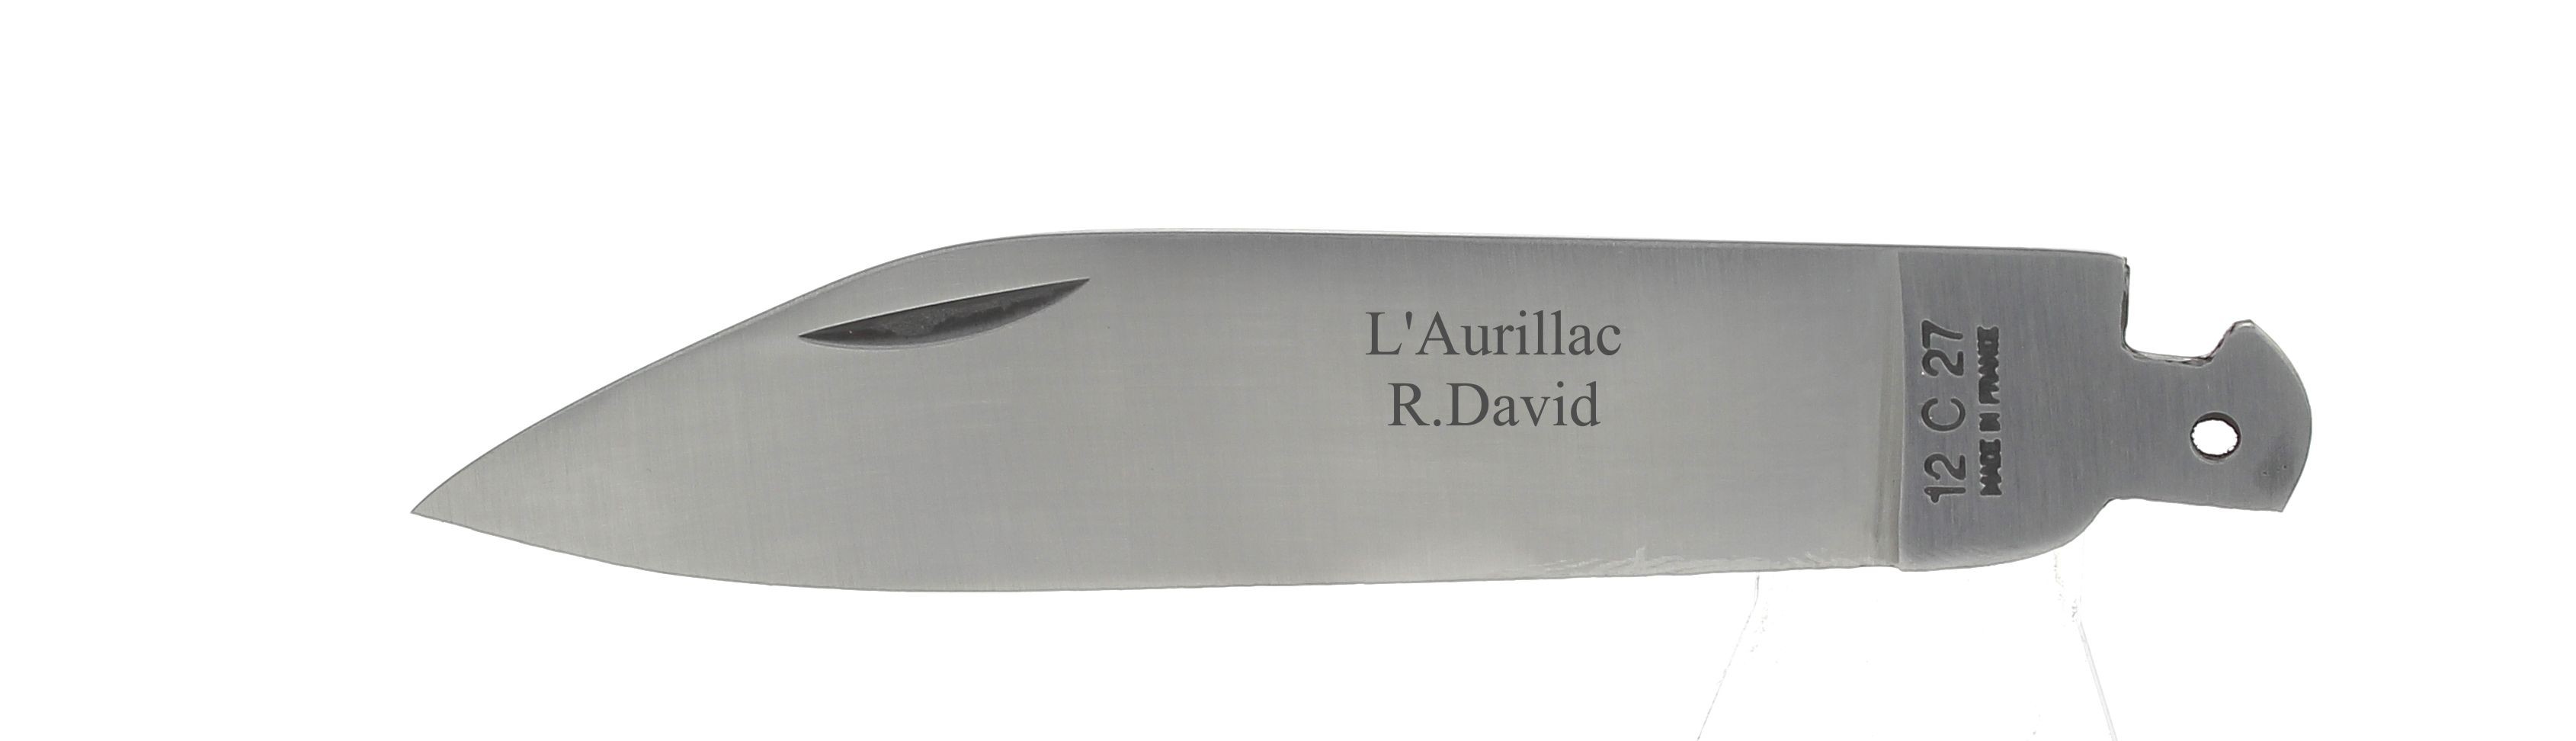 Blade Sandvik 12C27 stainless Aurillac